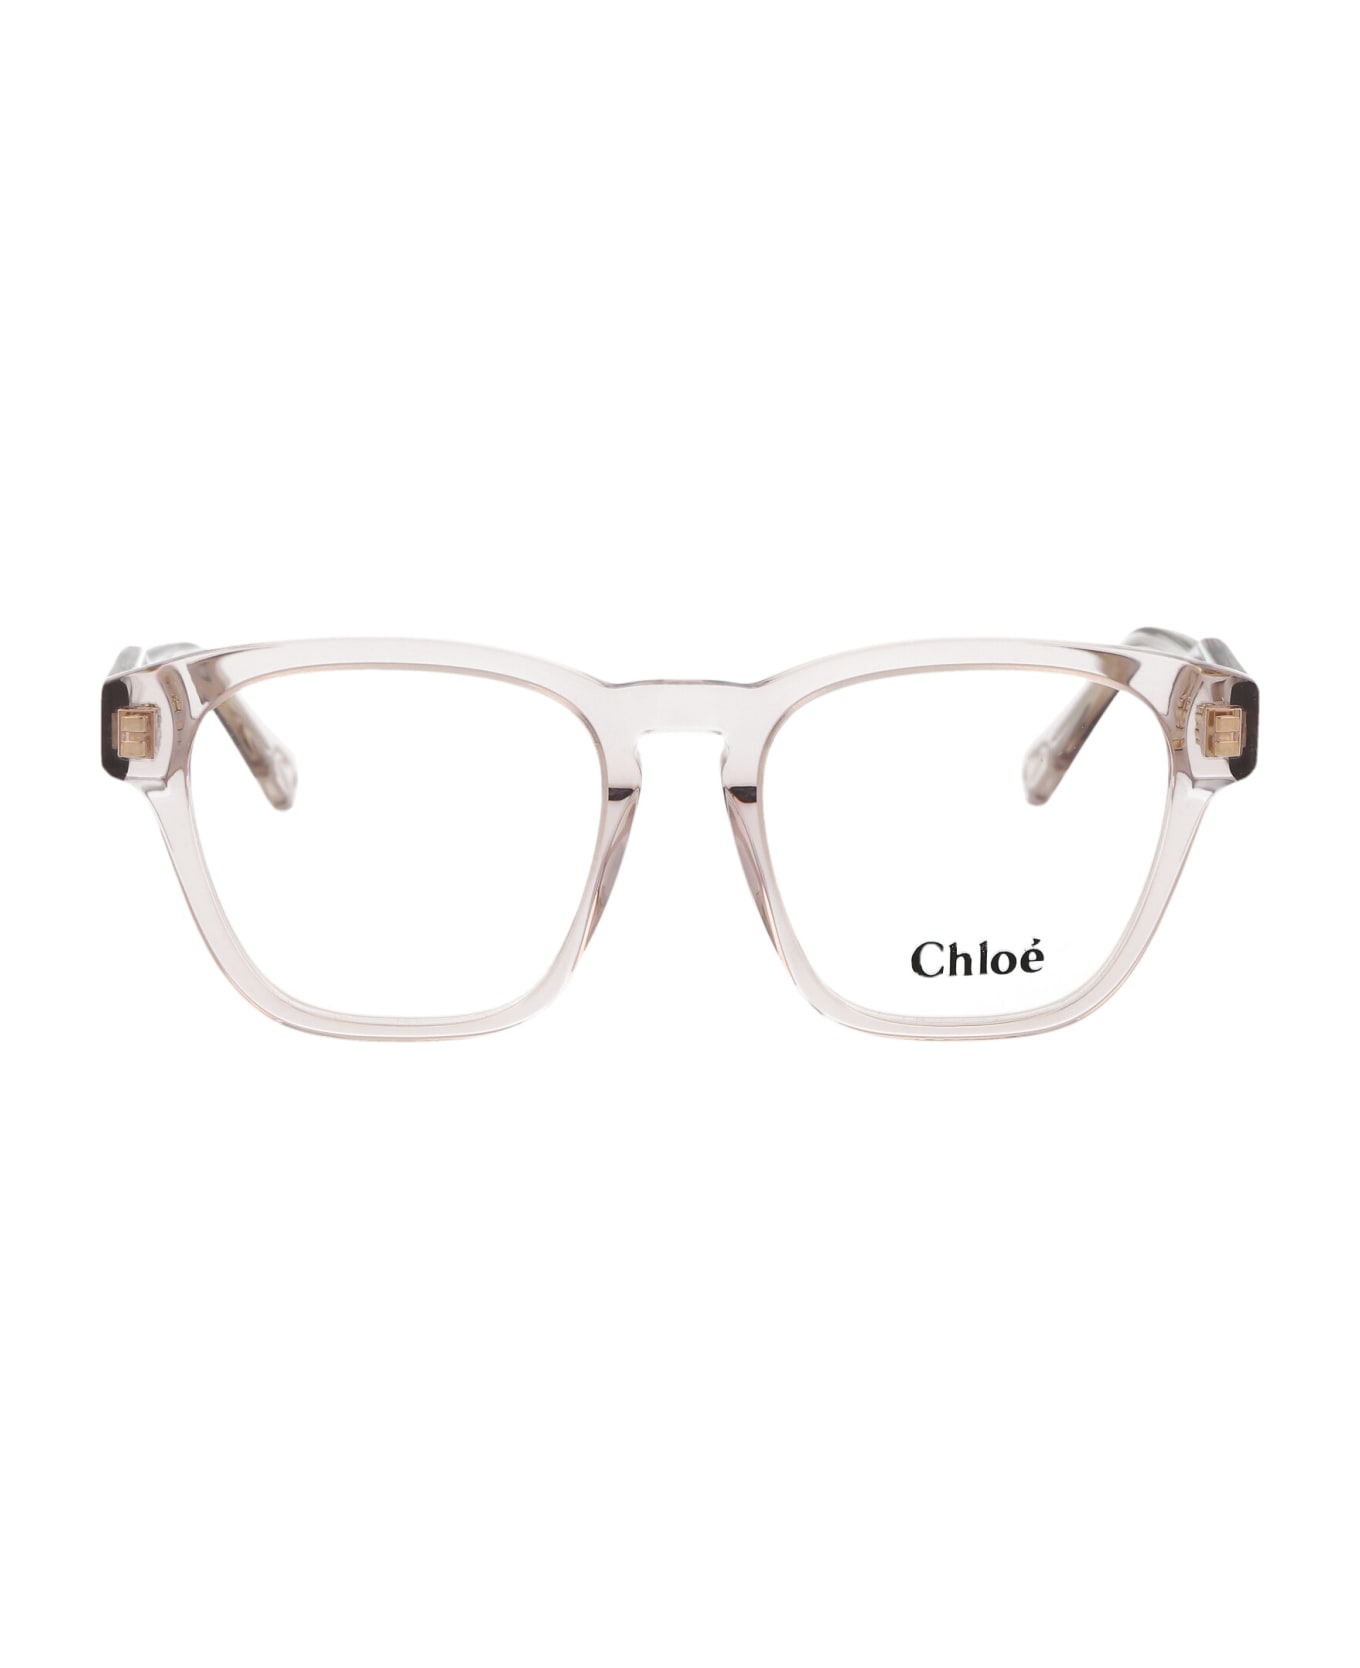 Chloé Eyewear Ch0161o Glasses - 005 NUDE NUDE TRANSPARENT